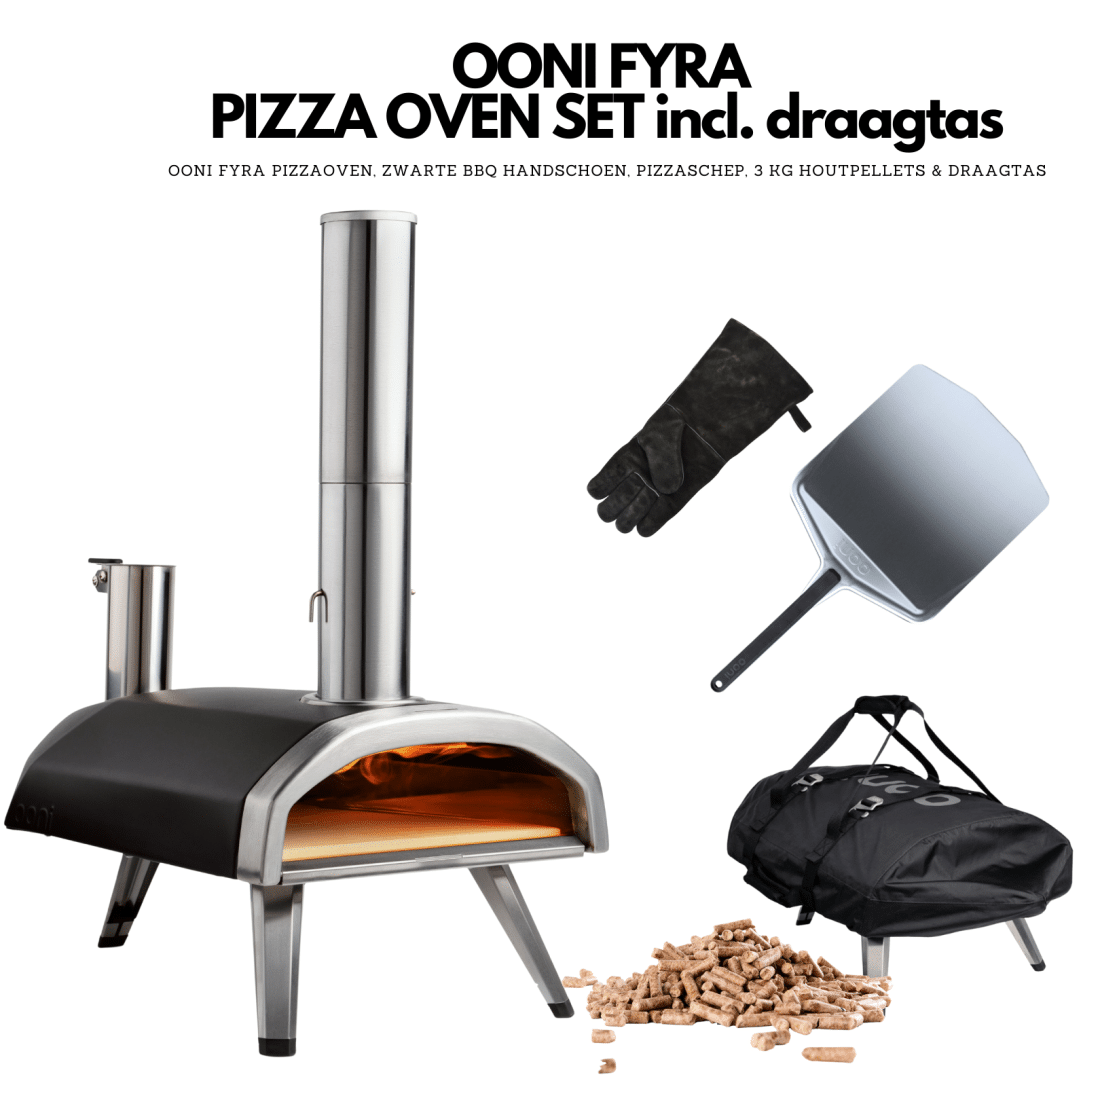 Super complete OONI Fyra pizza oven set